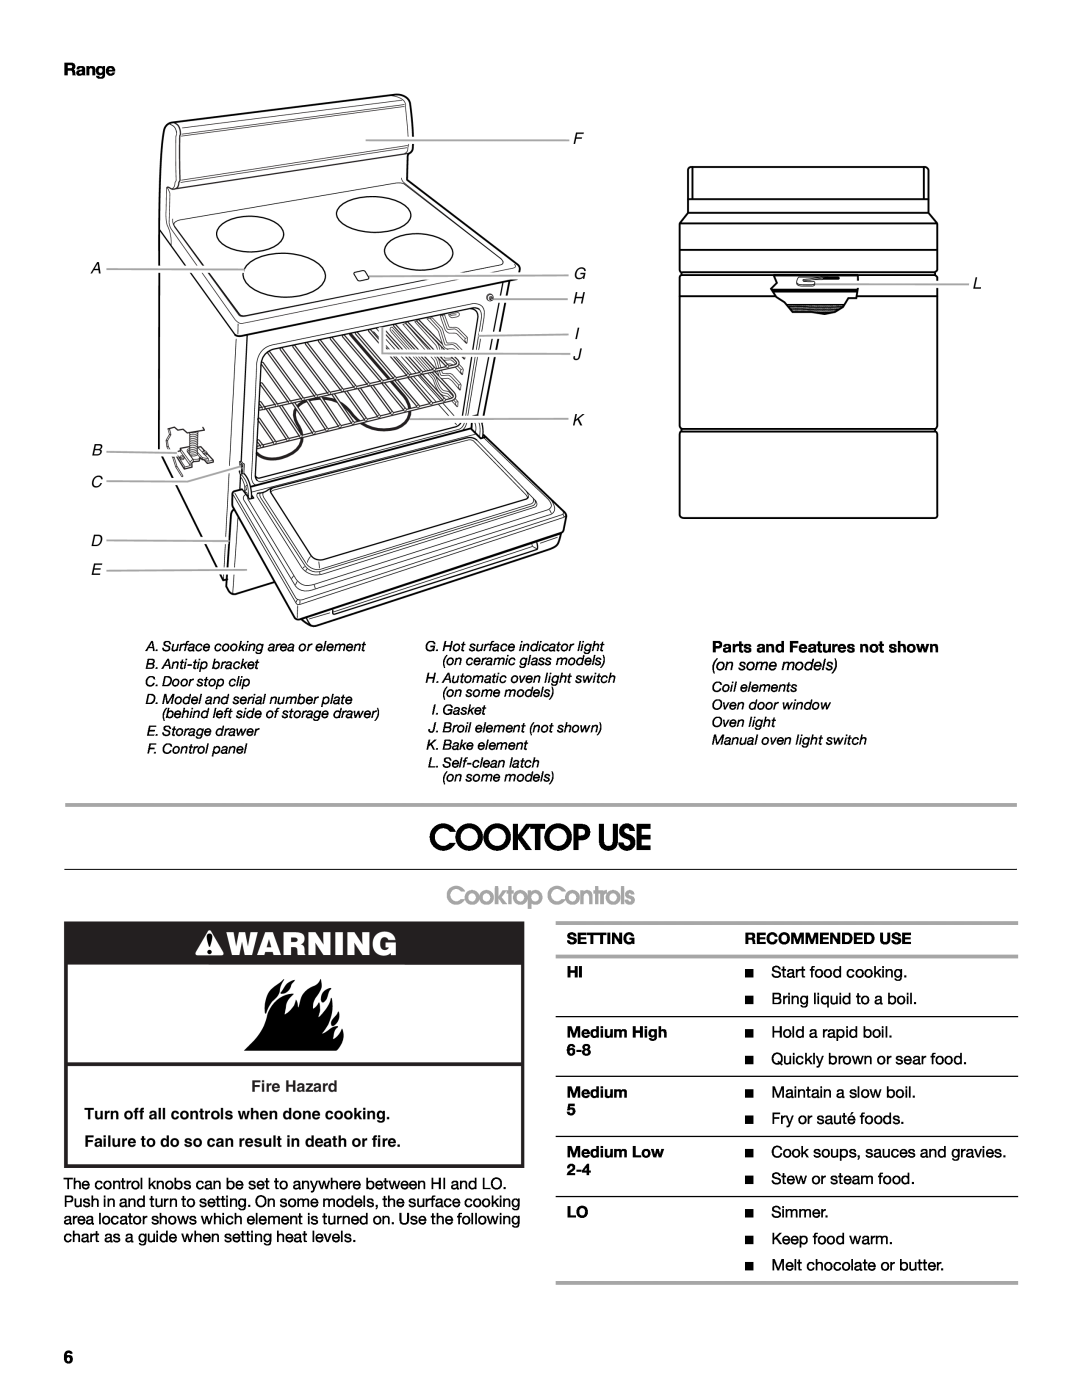 Whirlpool W10017720 manual Cooktop Use, Cooktop Controls, Range, F A G H I J K B C D E, Fire Hazard, on some models 